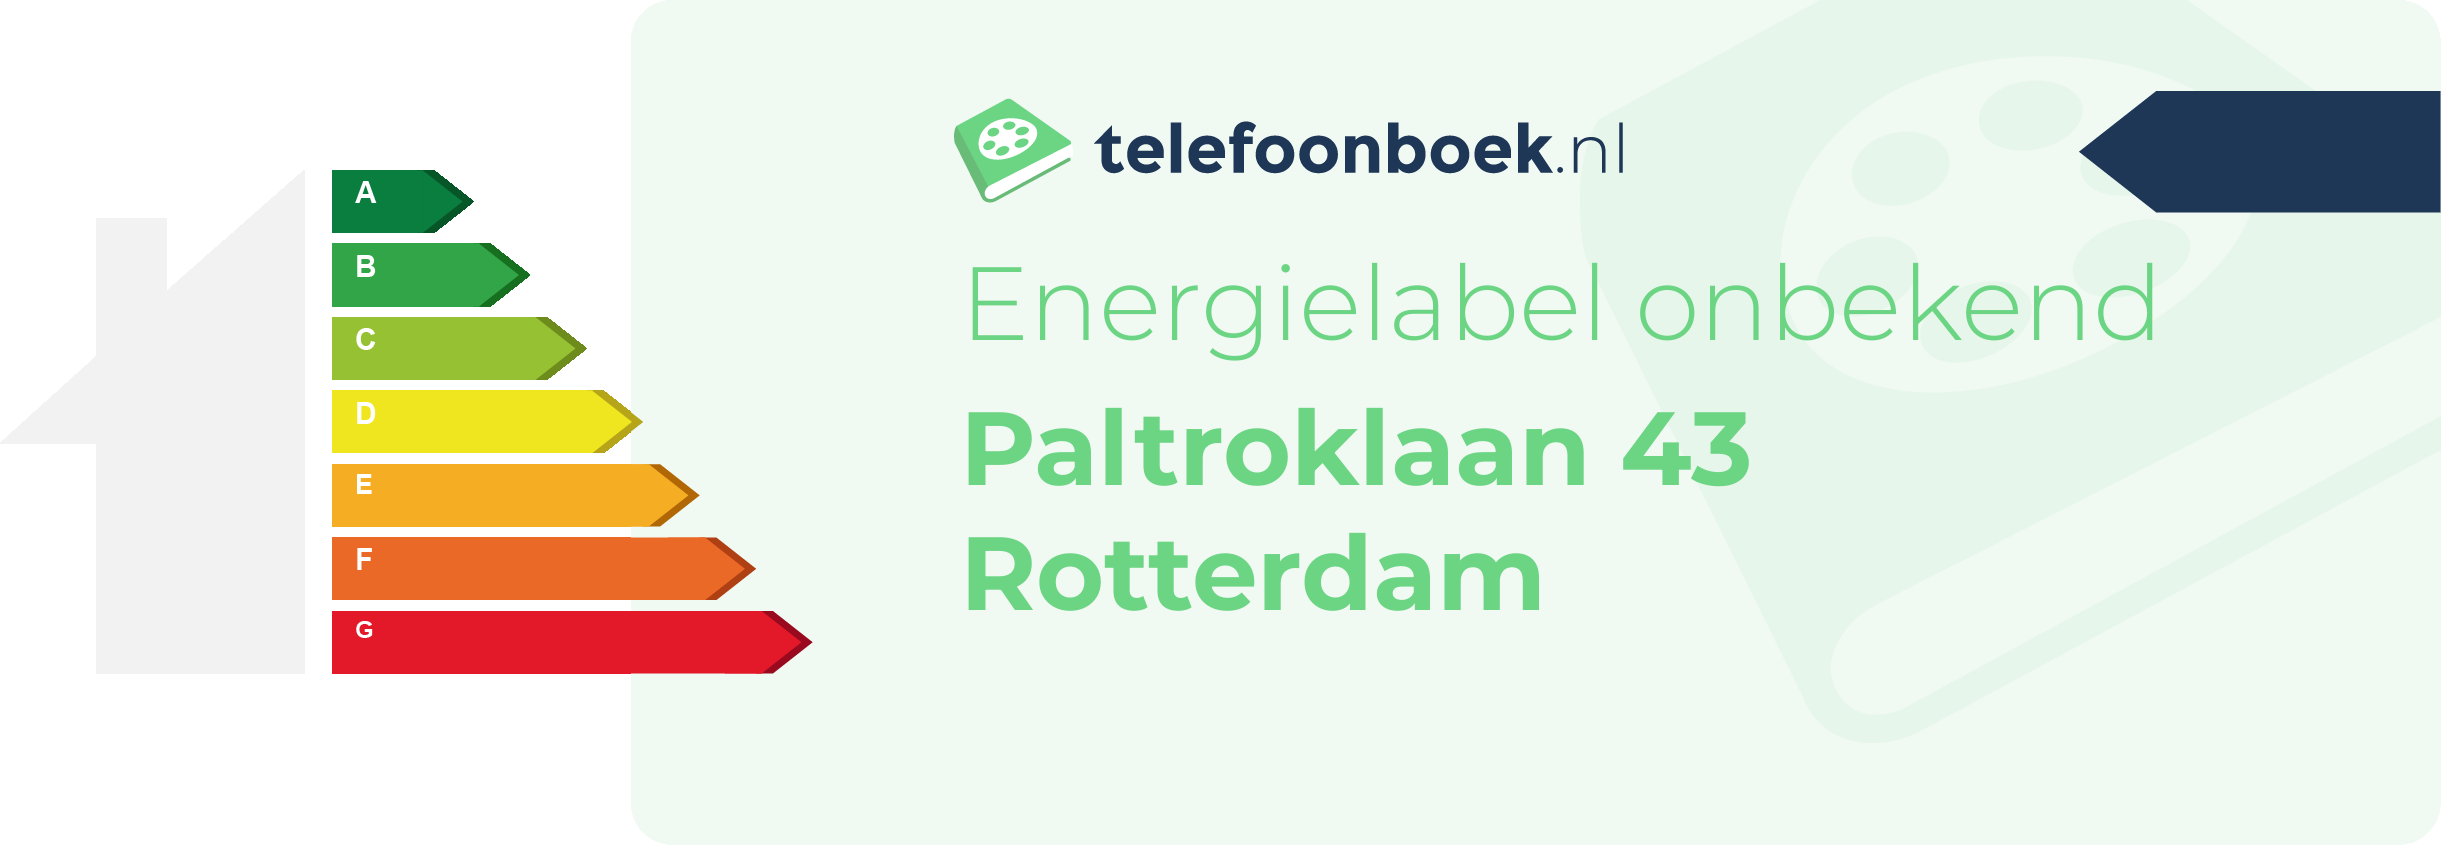 Energielabel Paltroklaan 43 Rotterdam